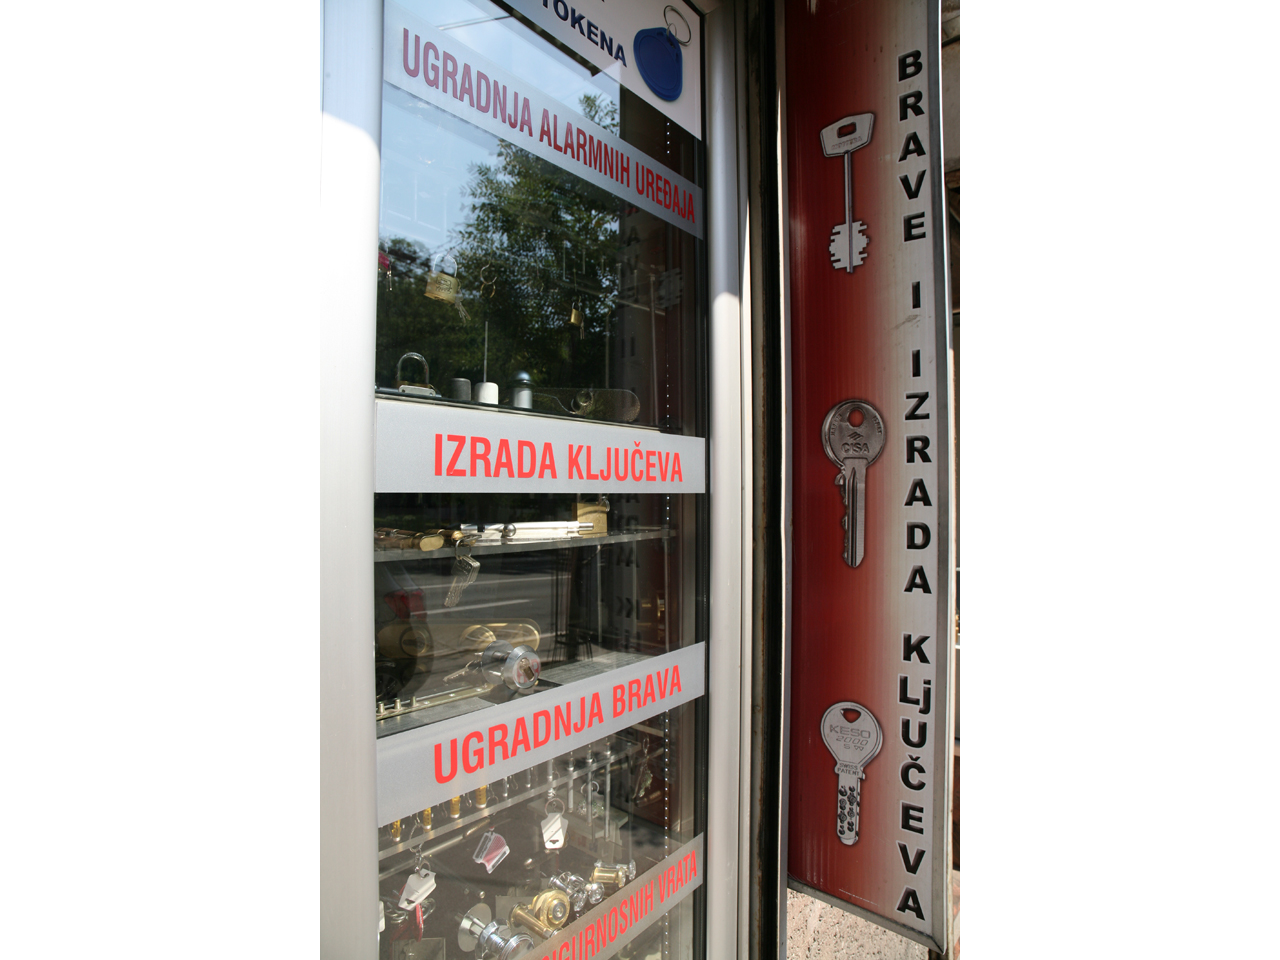 ALARM ELEKTRONIK BG Zanatske usluge Beograd